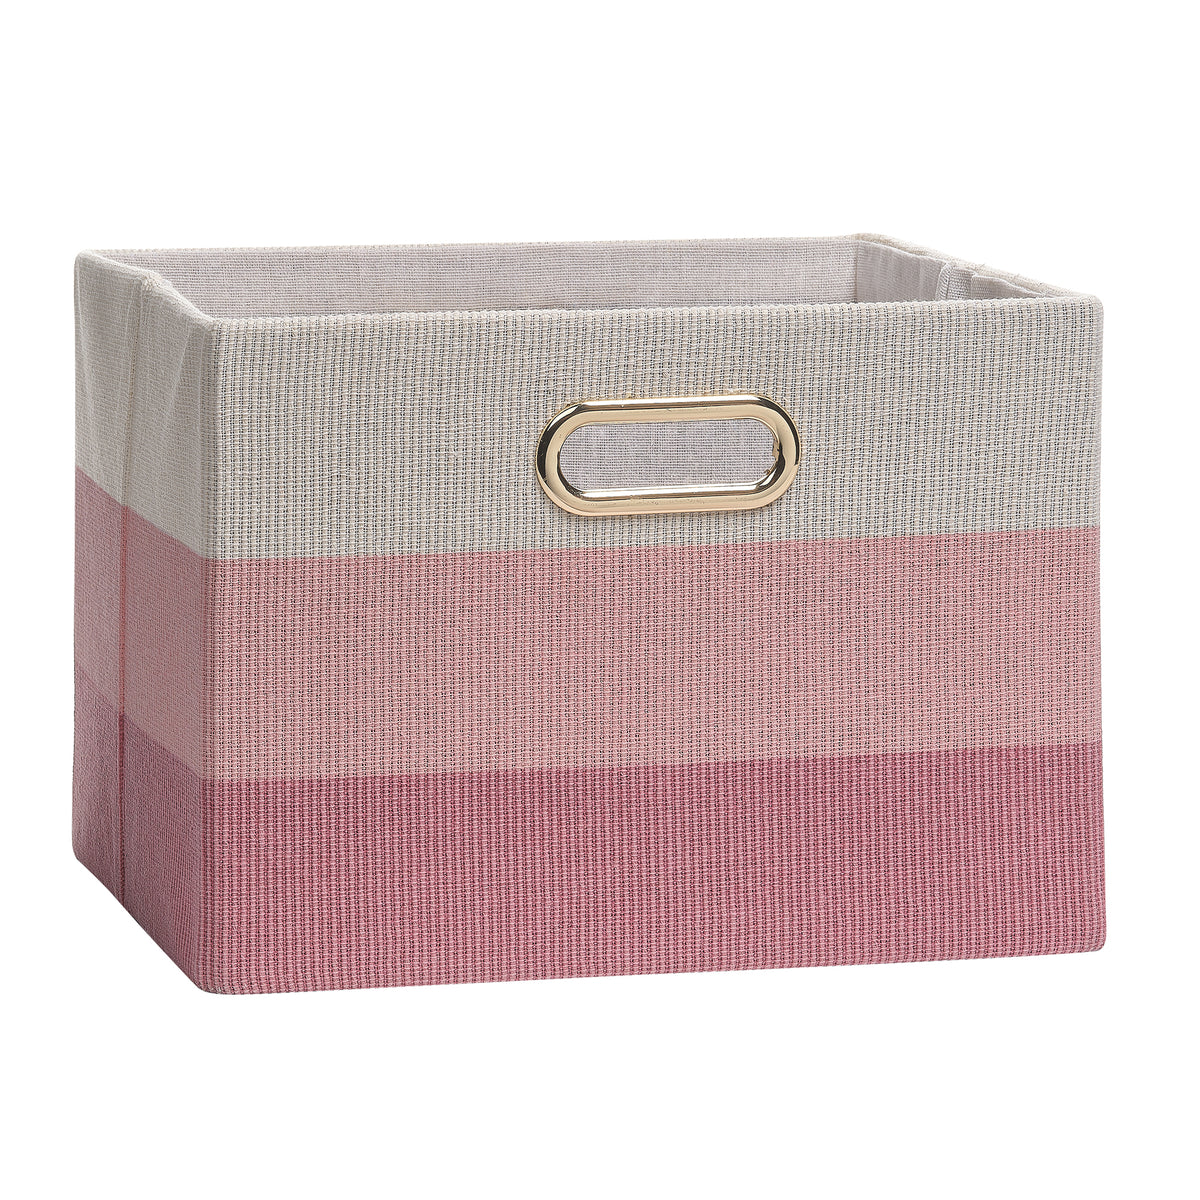 Folding Basket Storage Cube Pink Gingham